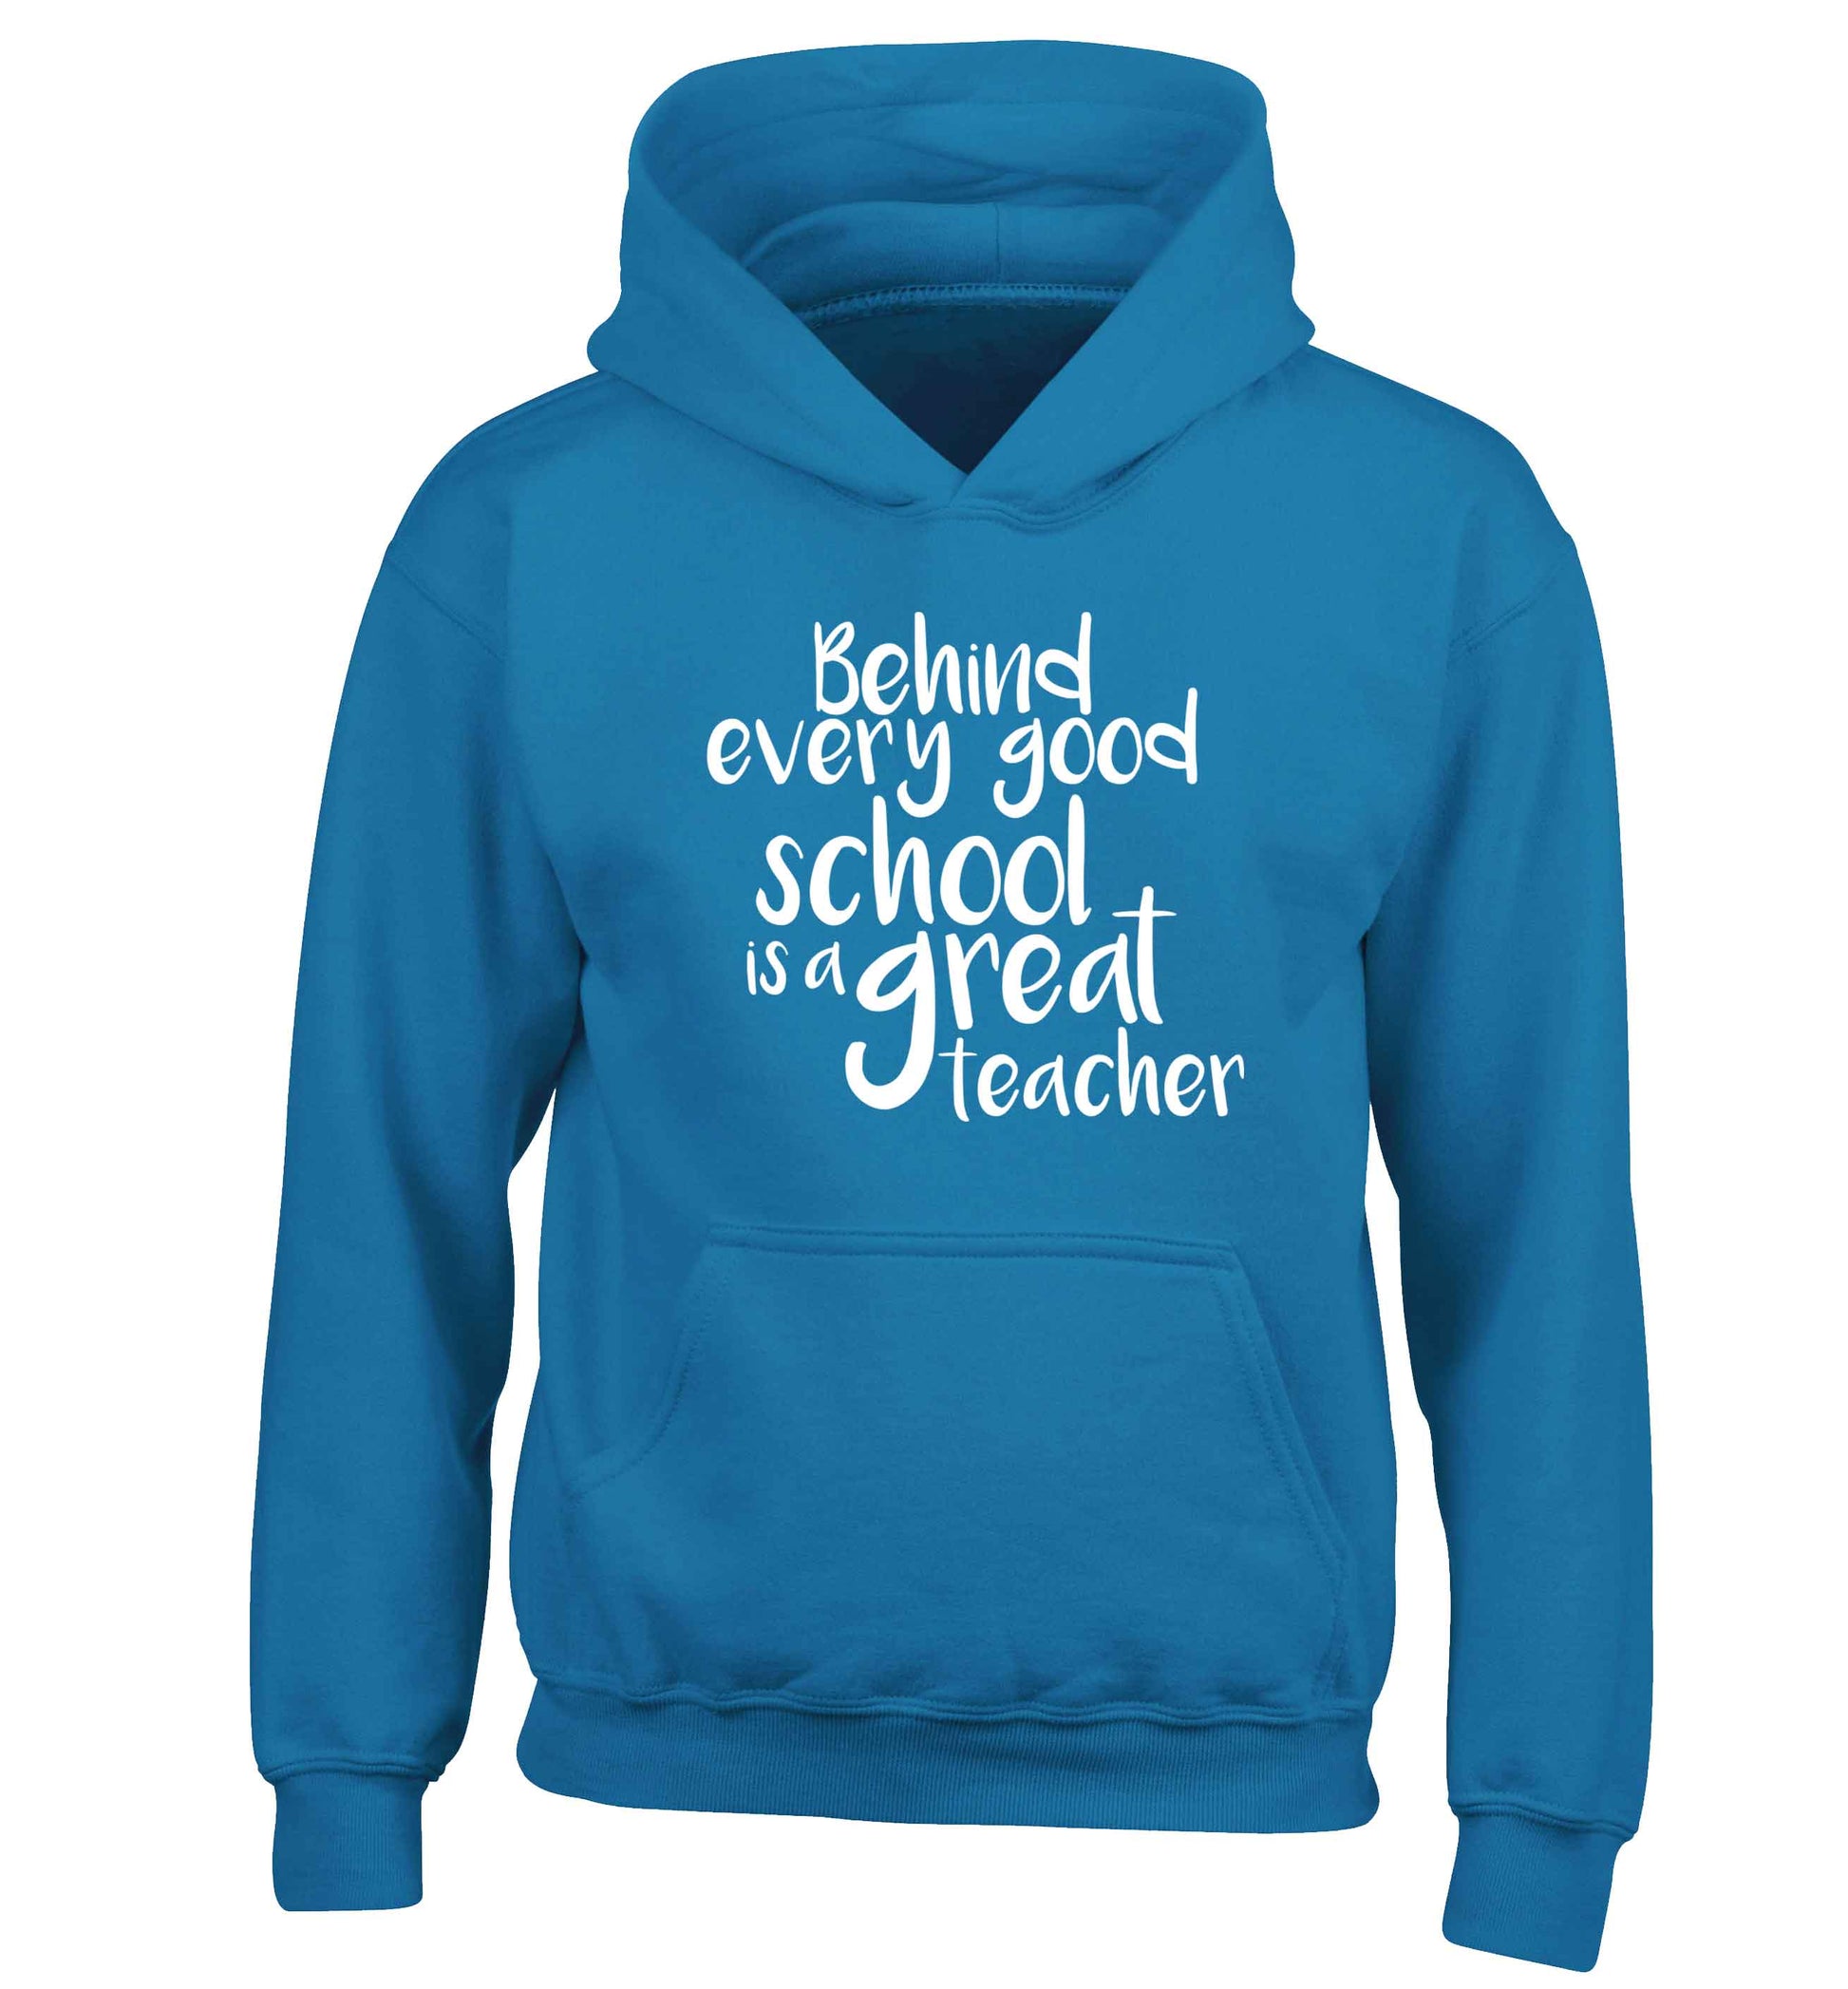 Behind every good school is a great teacher children's blue hoodie 12-13 Years